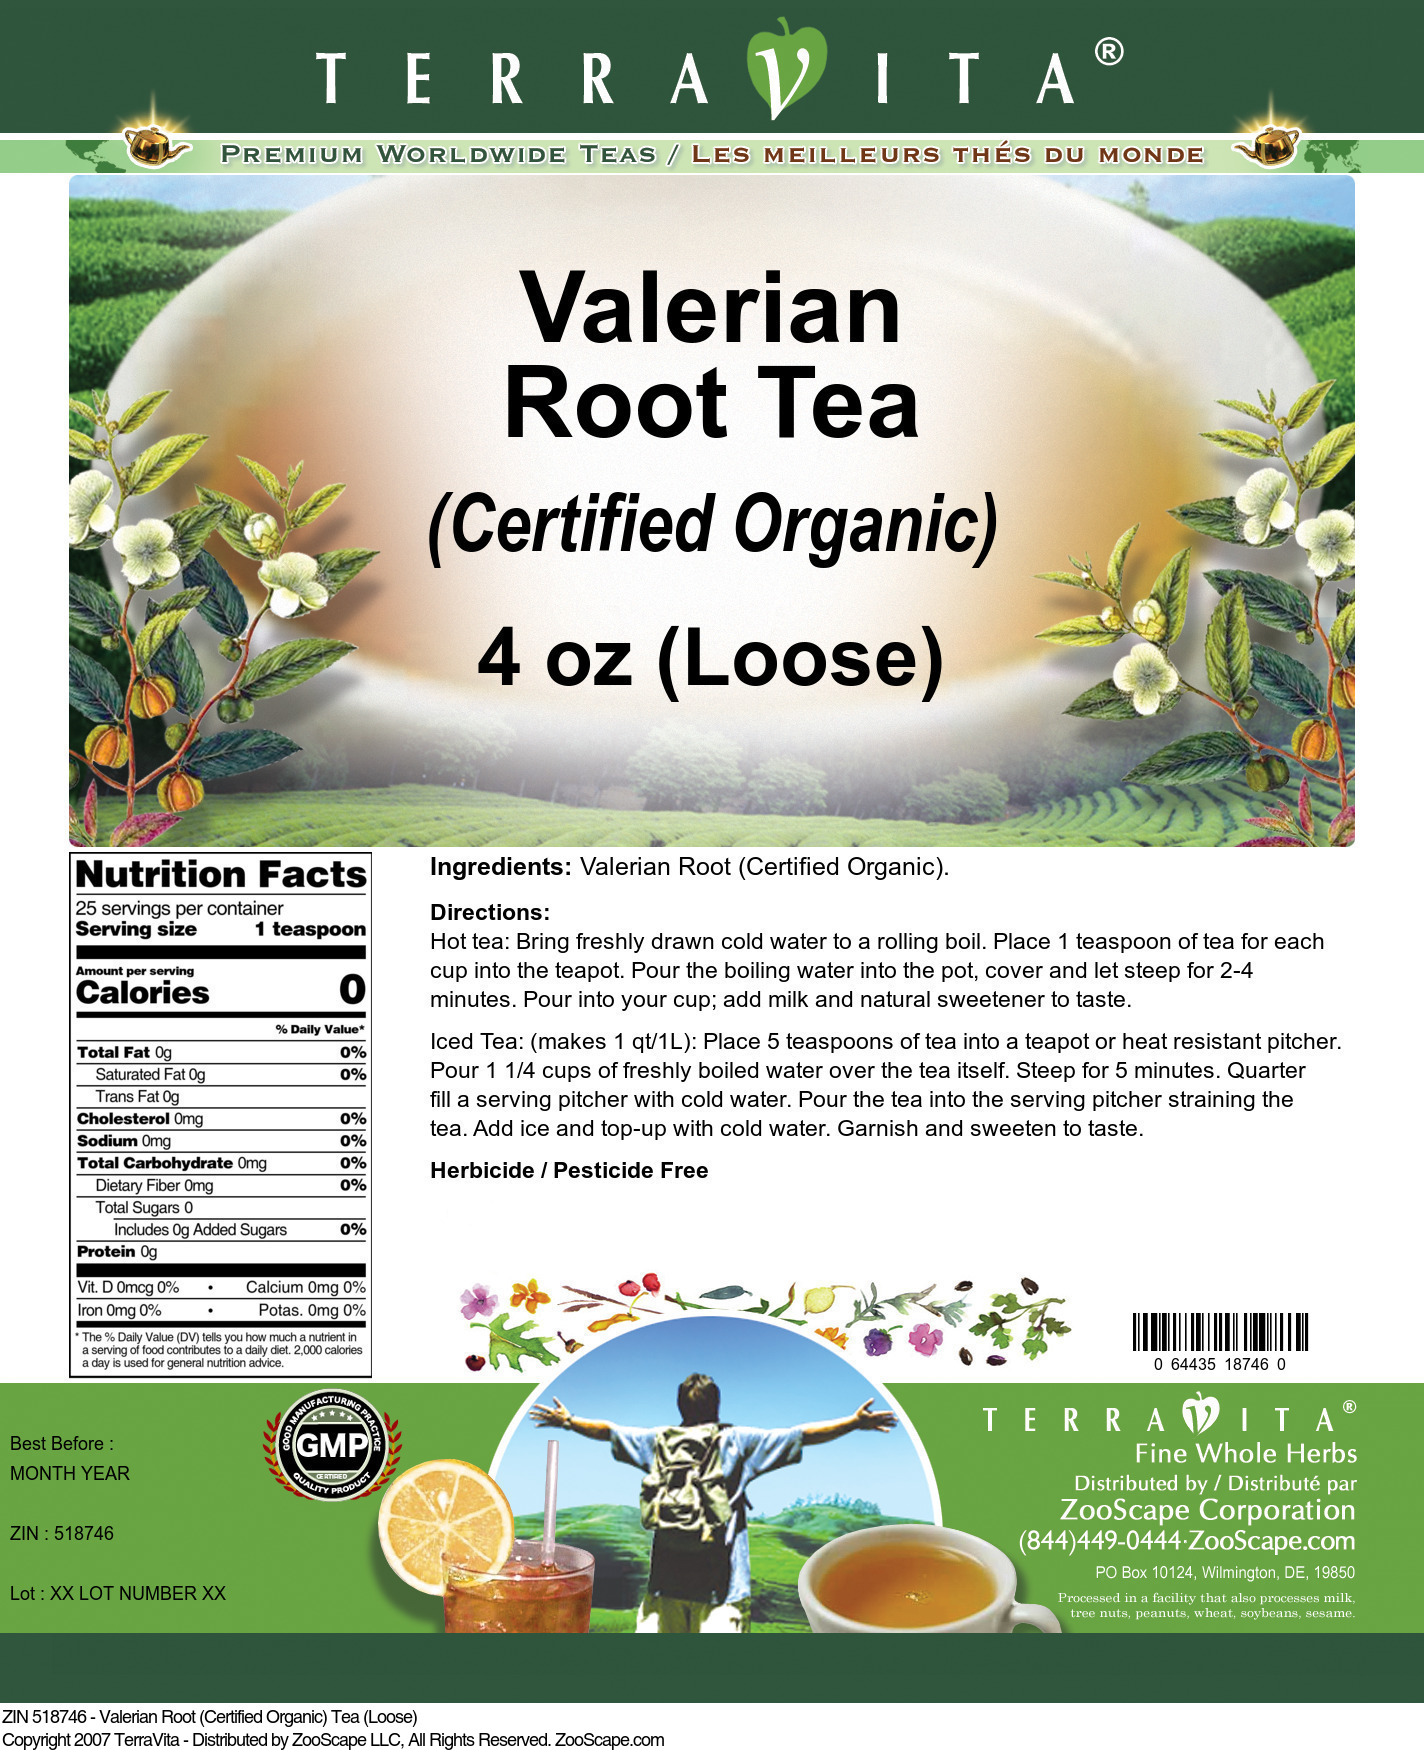 Valerian Root (Certified Organic) Tea (Loose) - Label